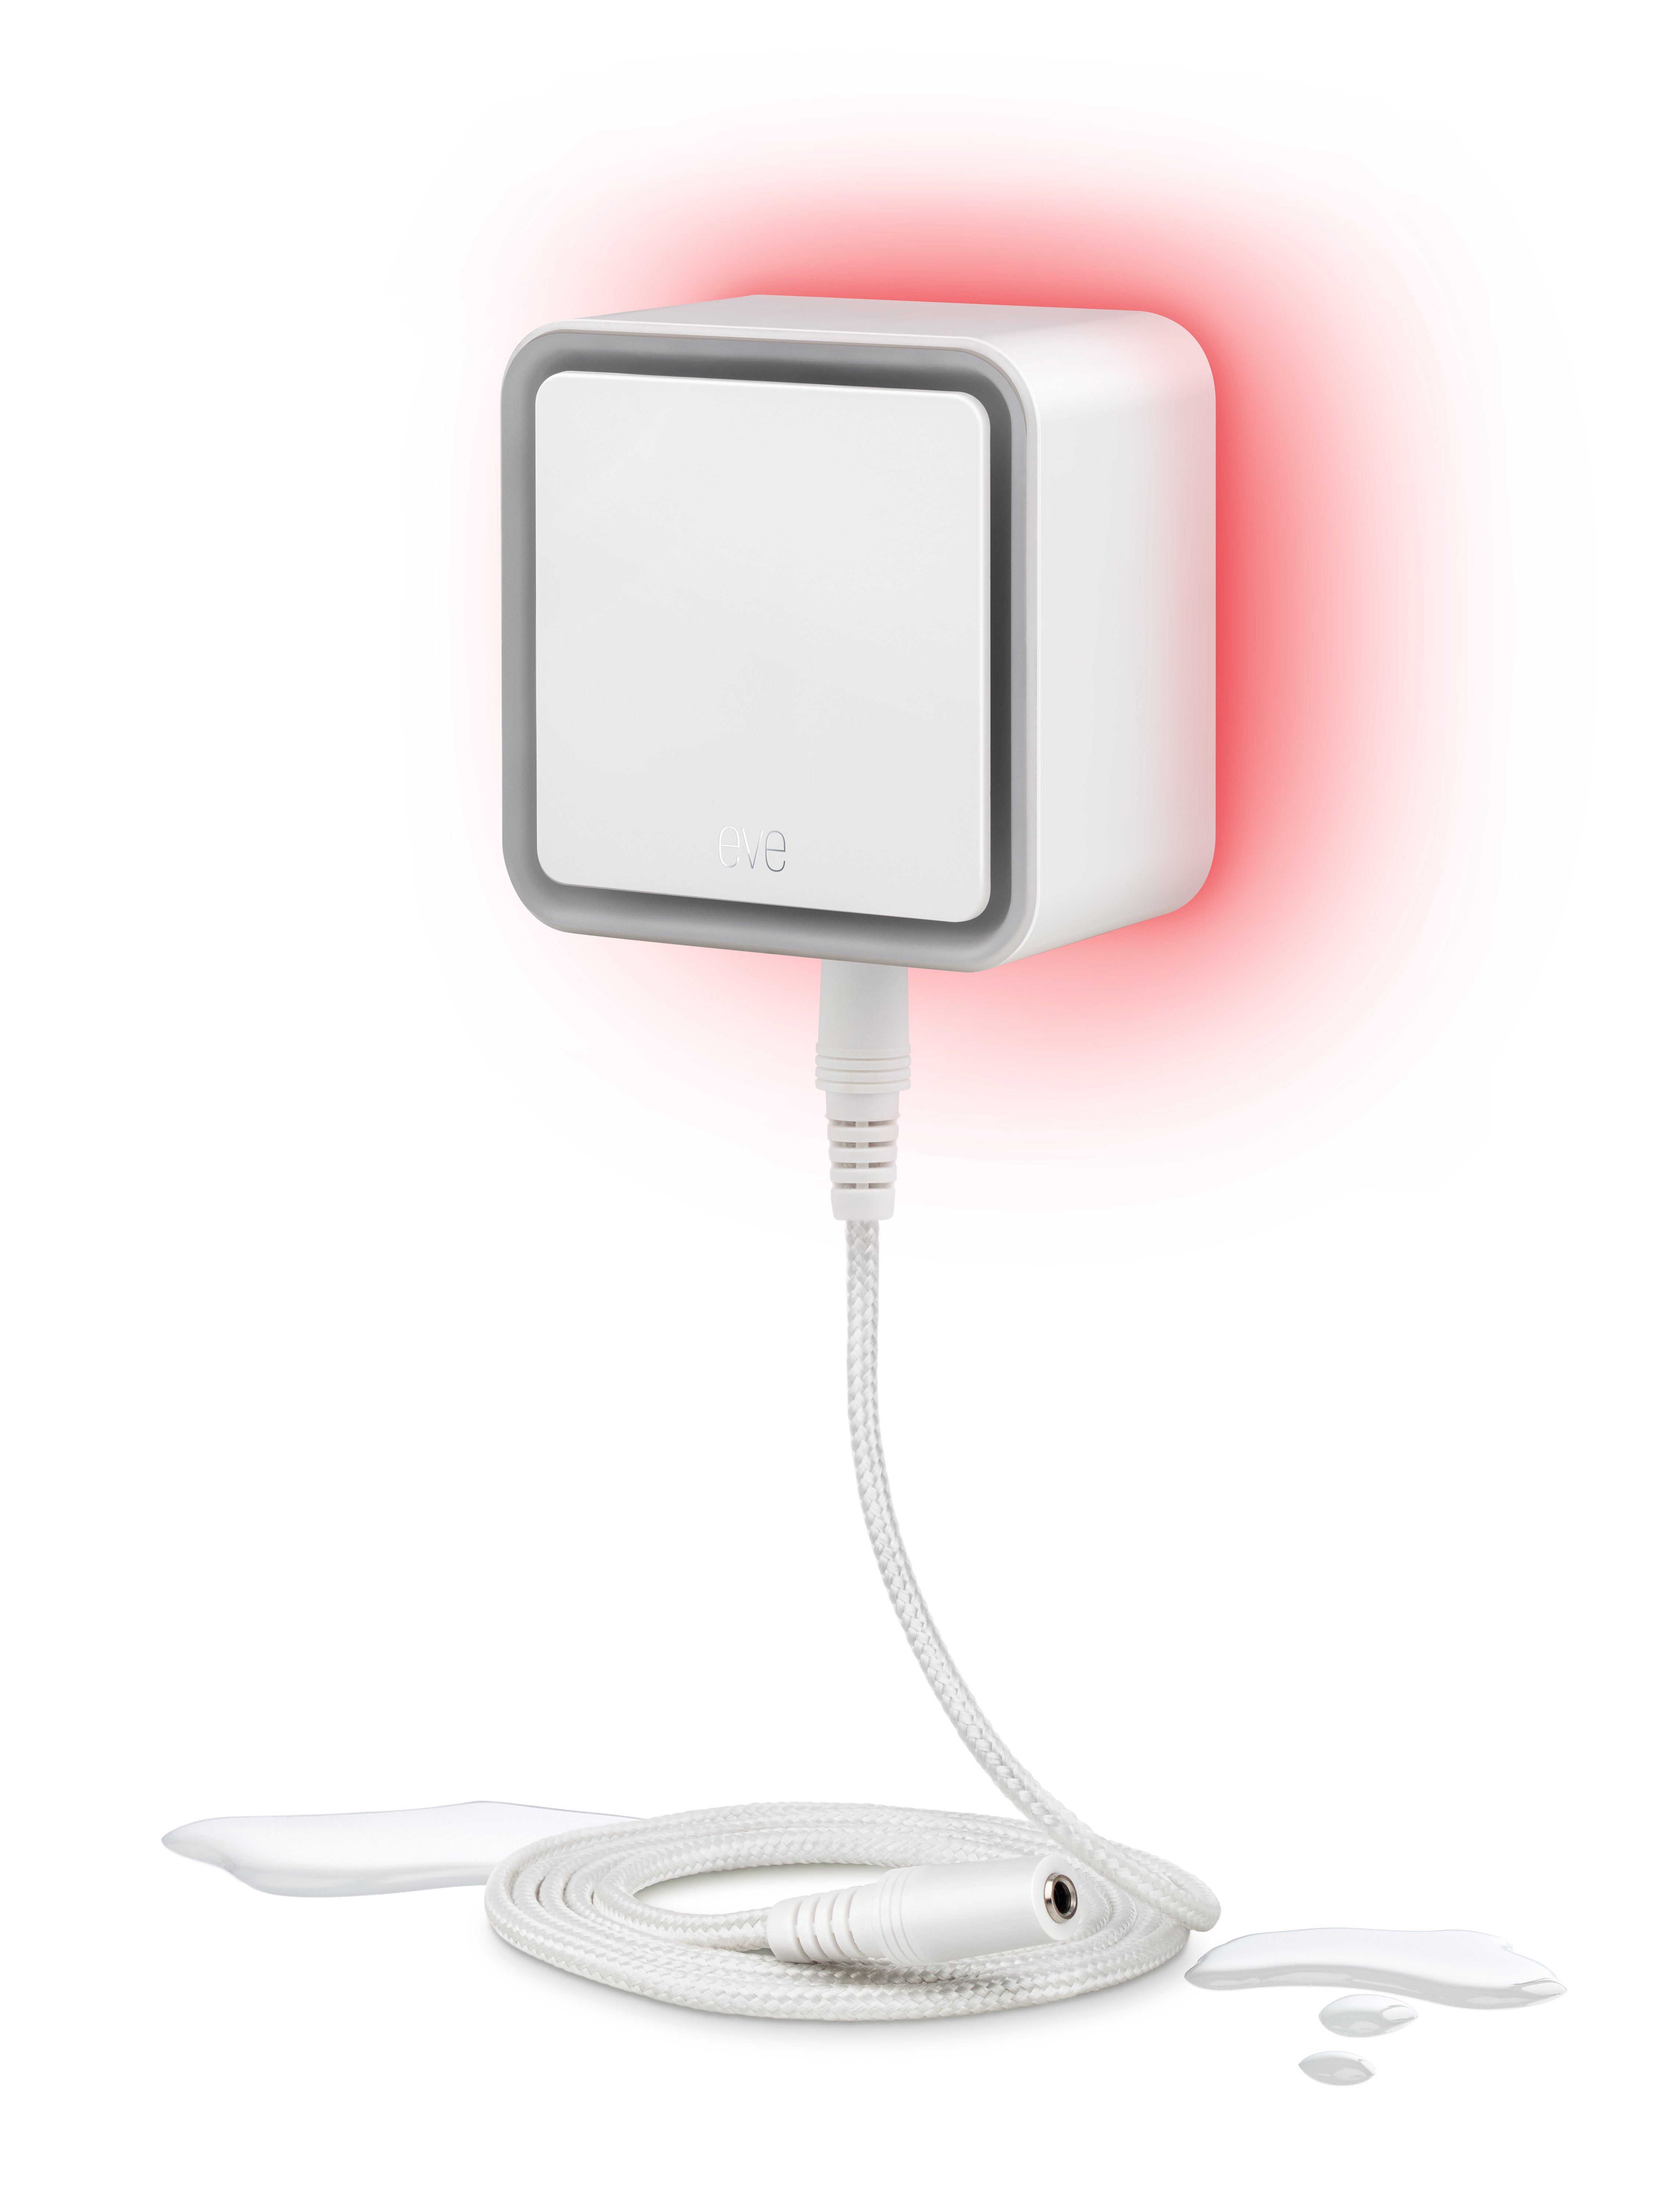 Eve Water Guard - Connected Water Leak Detector with Apple HomeKit technology - Elektronikk